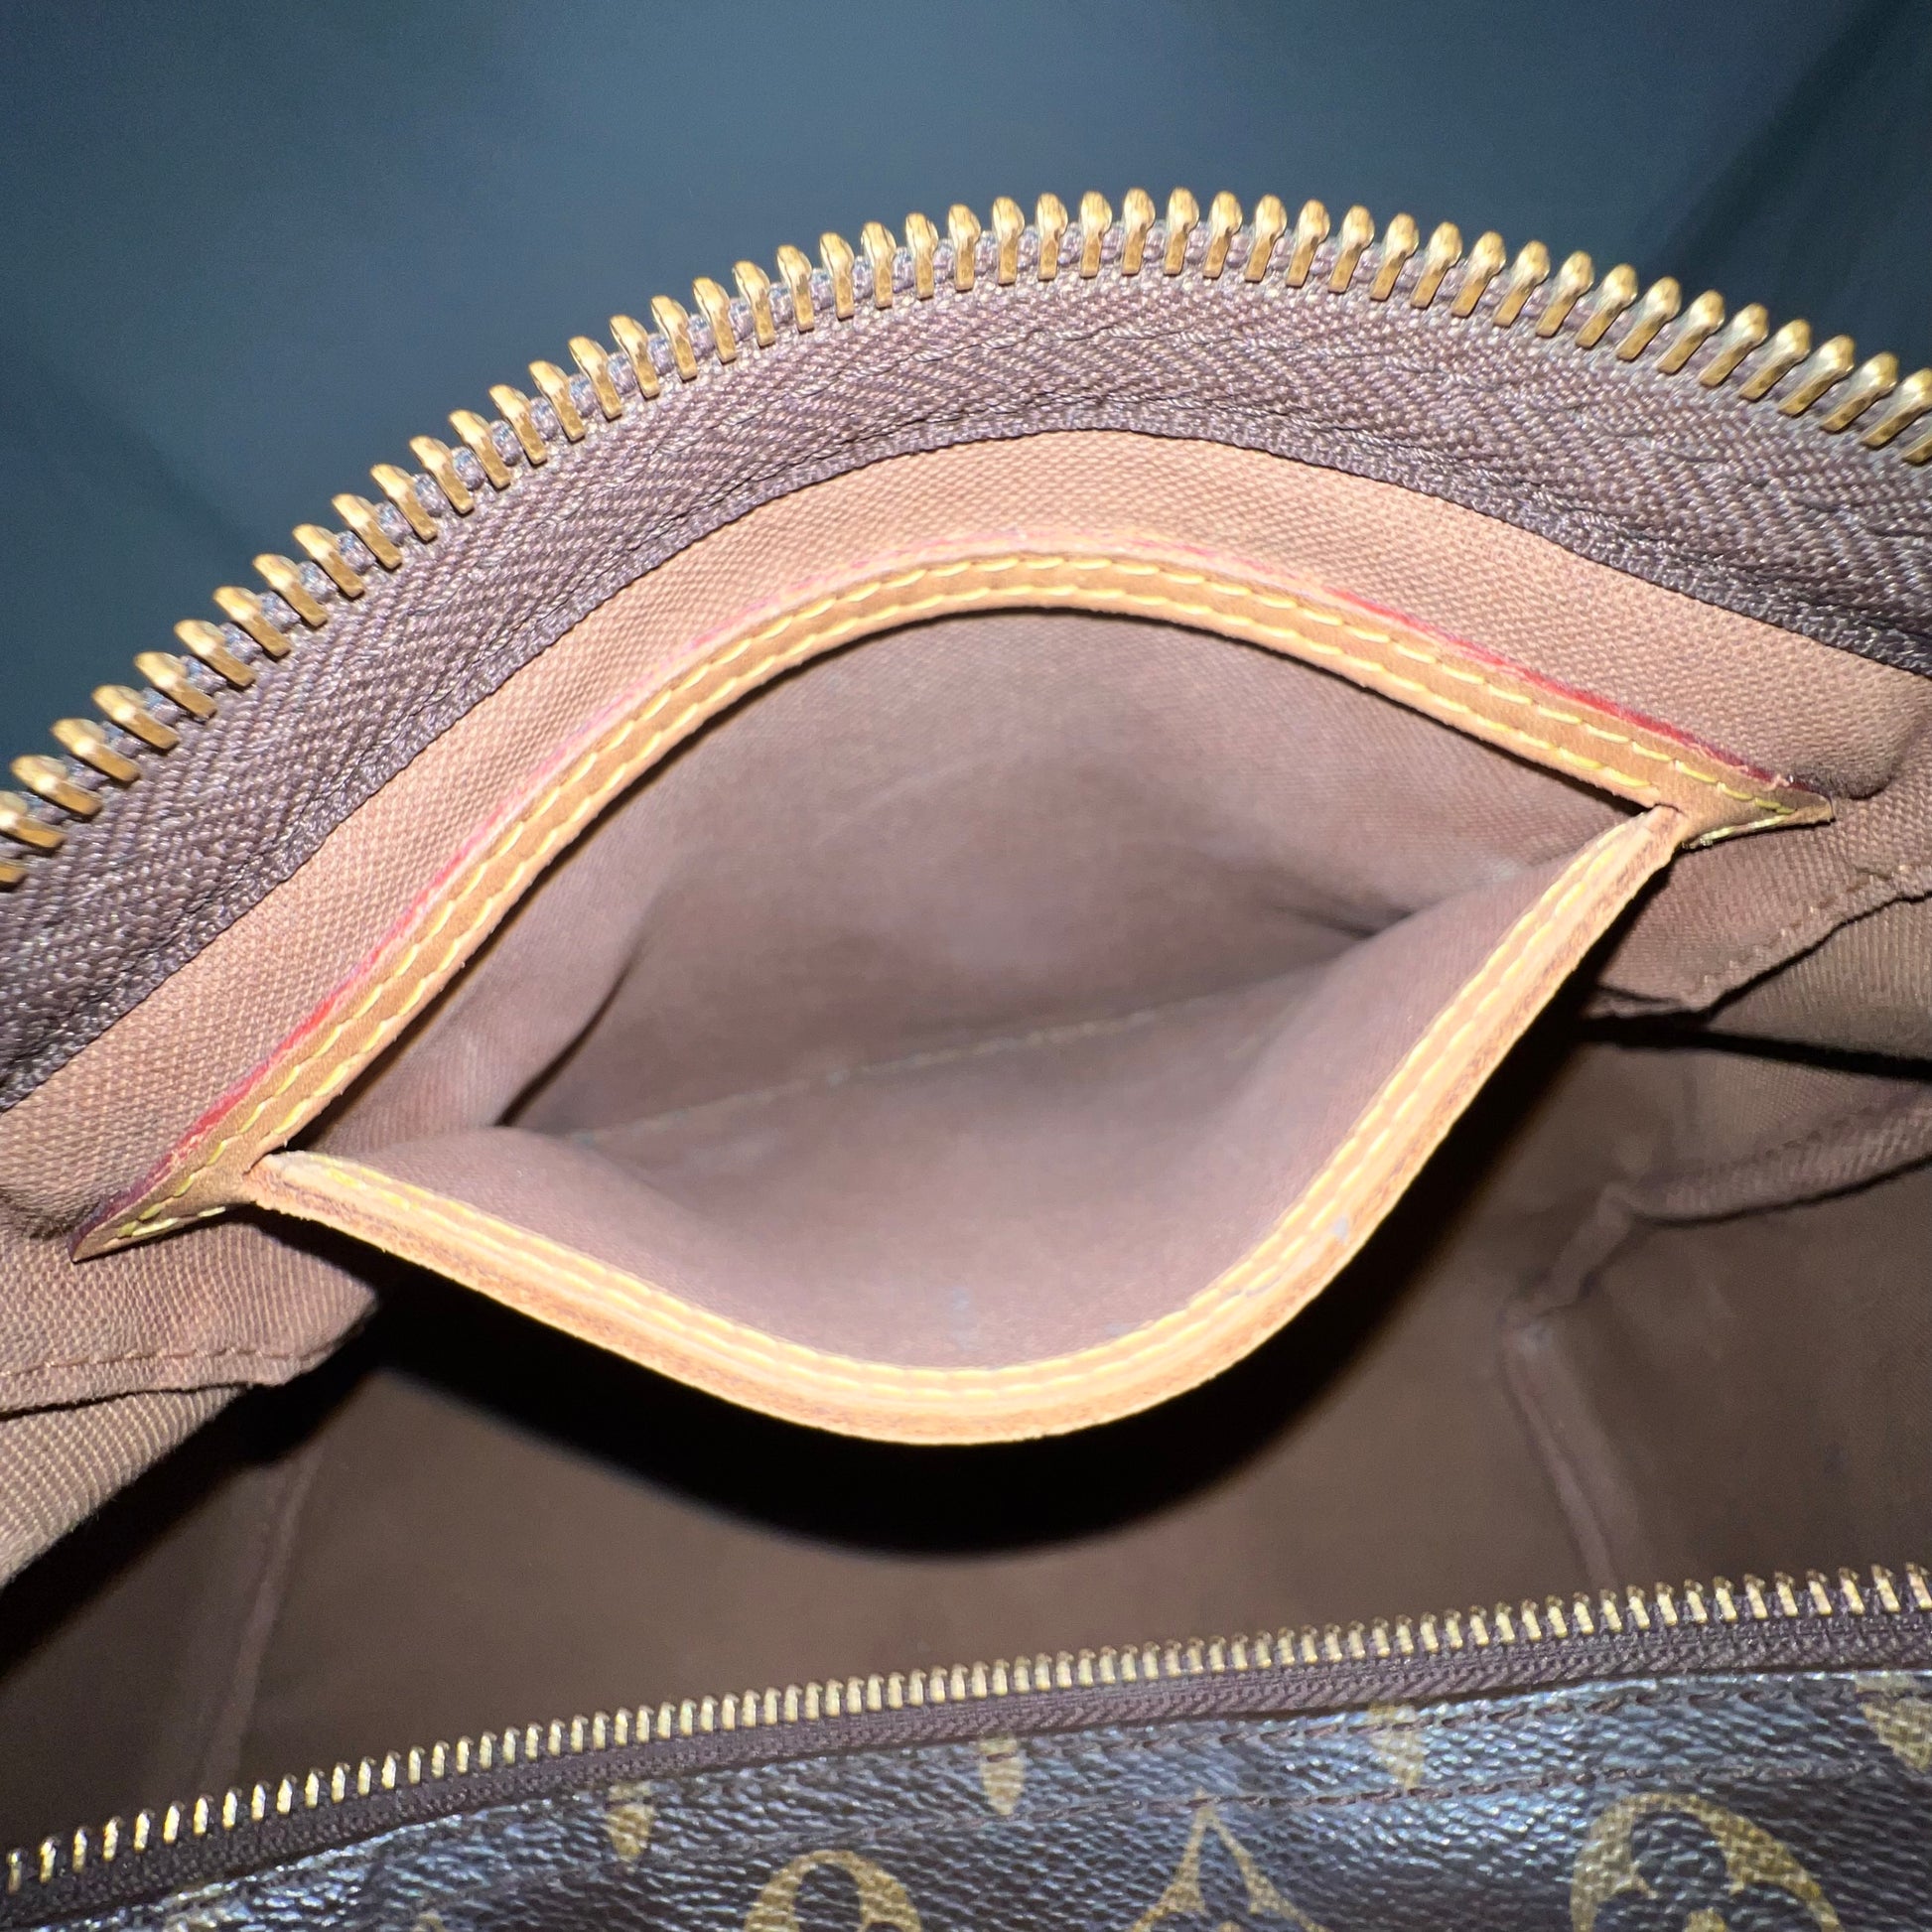 Louis Vuitton: The Speedy - The Vault